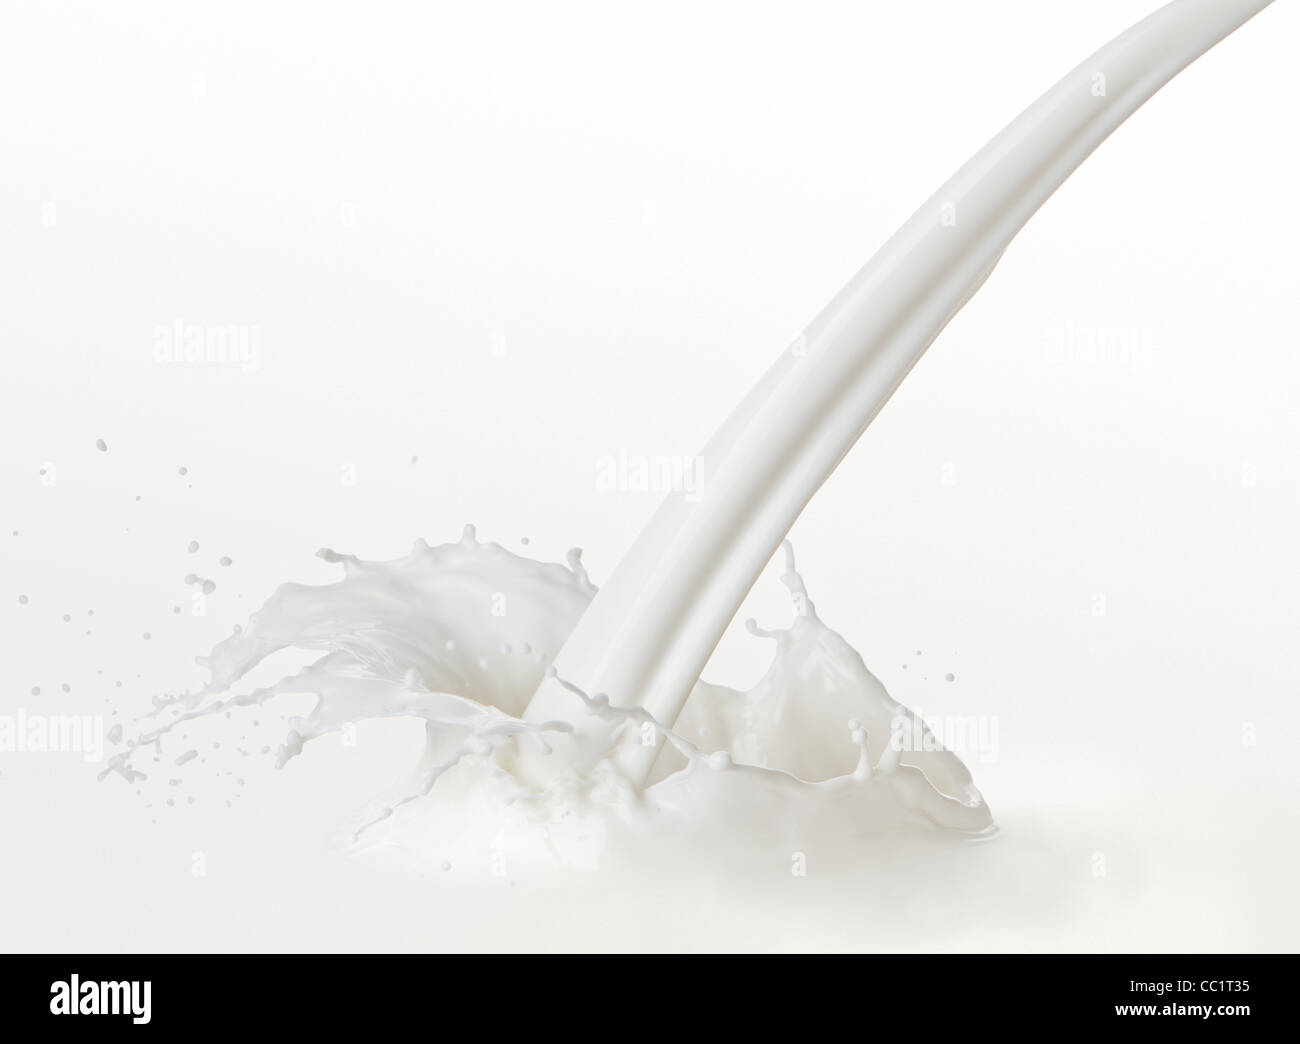 pouring milk or white liquid created splash Stock Photo